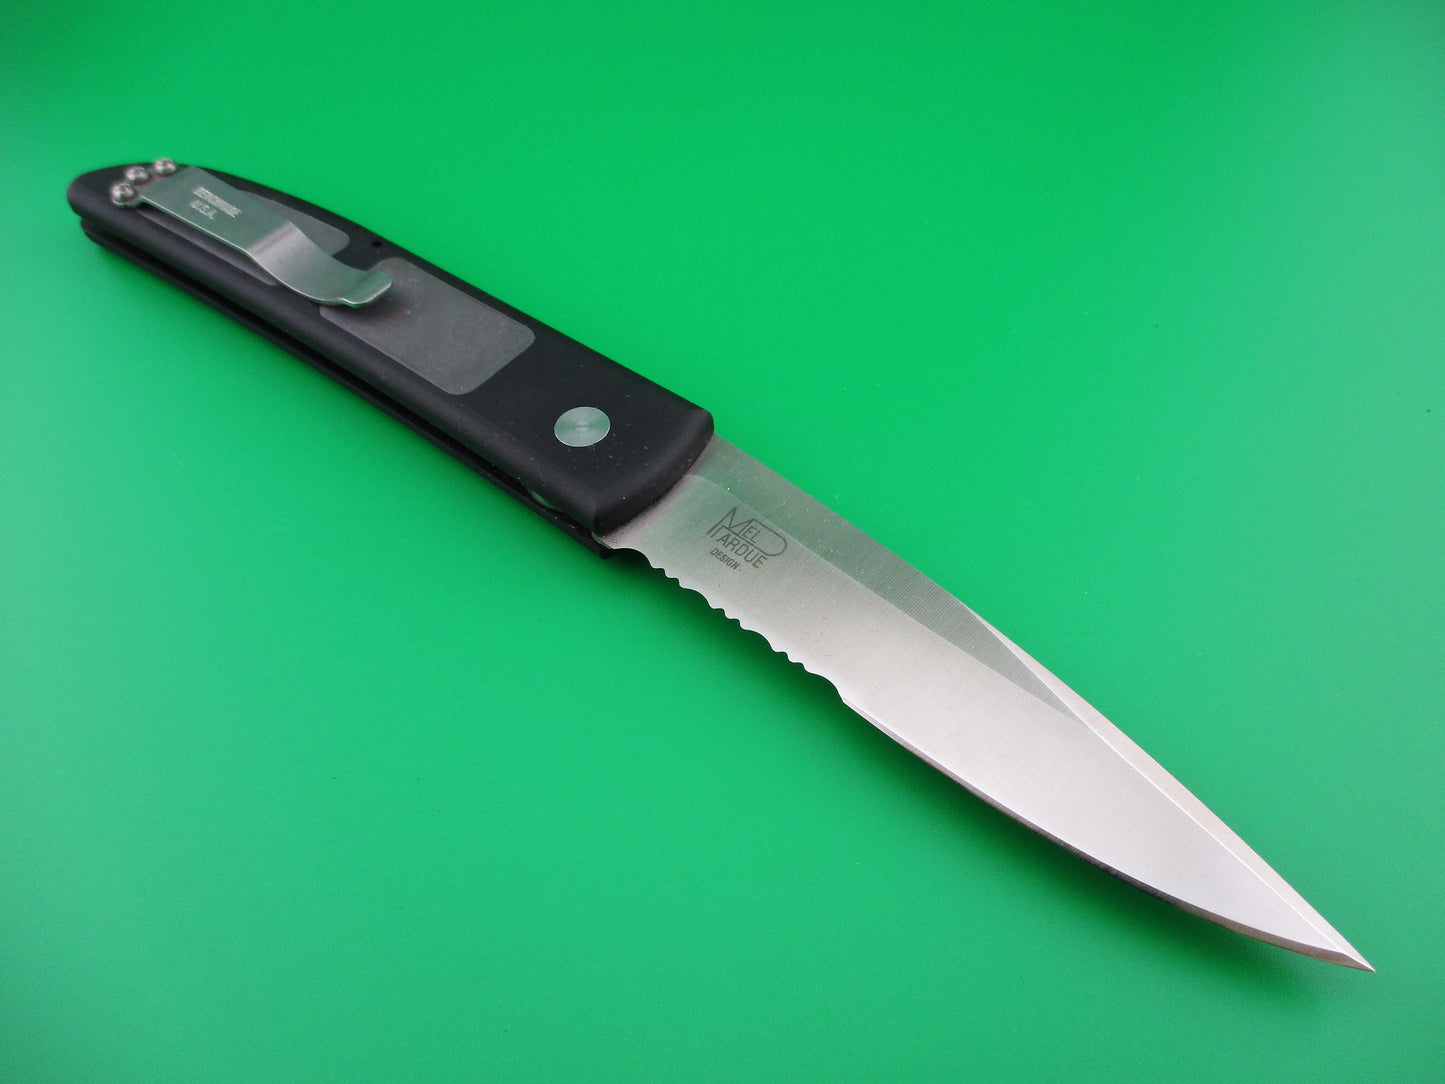 BENCHMADE 3000S MEL PARDUE design Semi serrated blade automatic knife